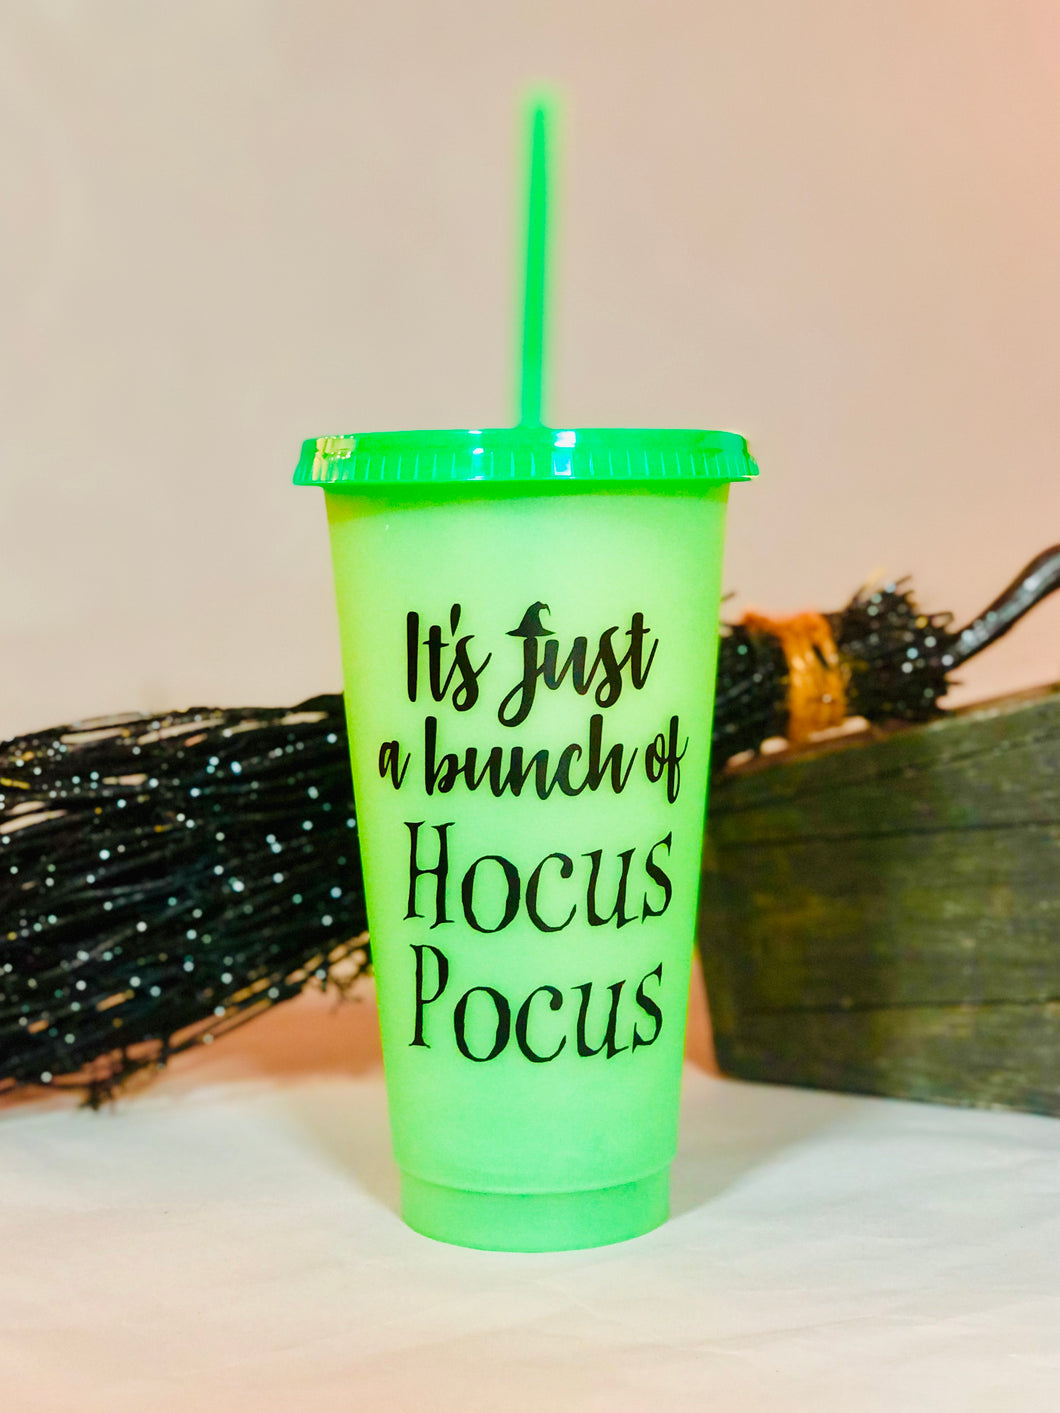 It’s just a bunch of Hocus Pocus